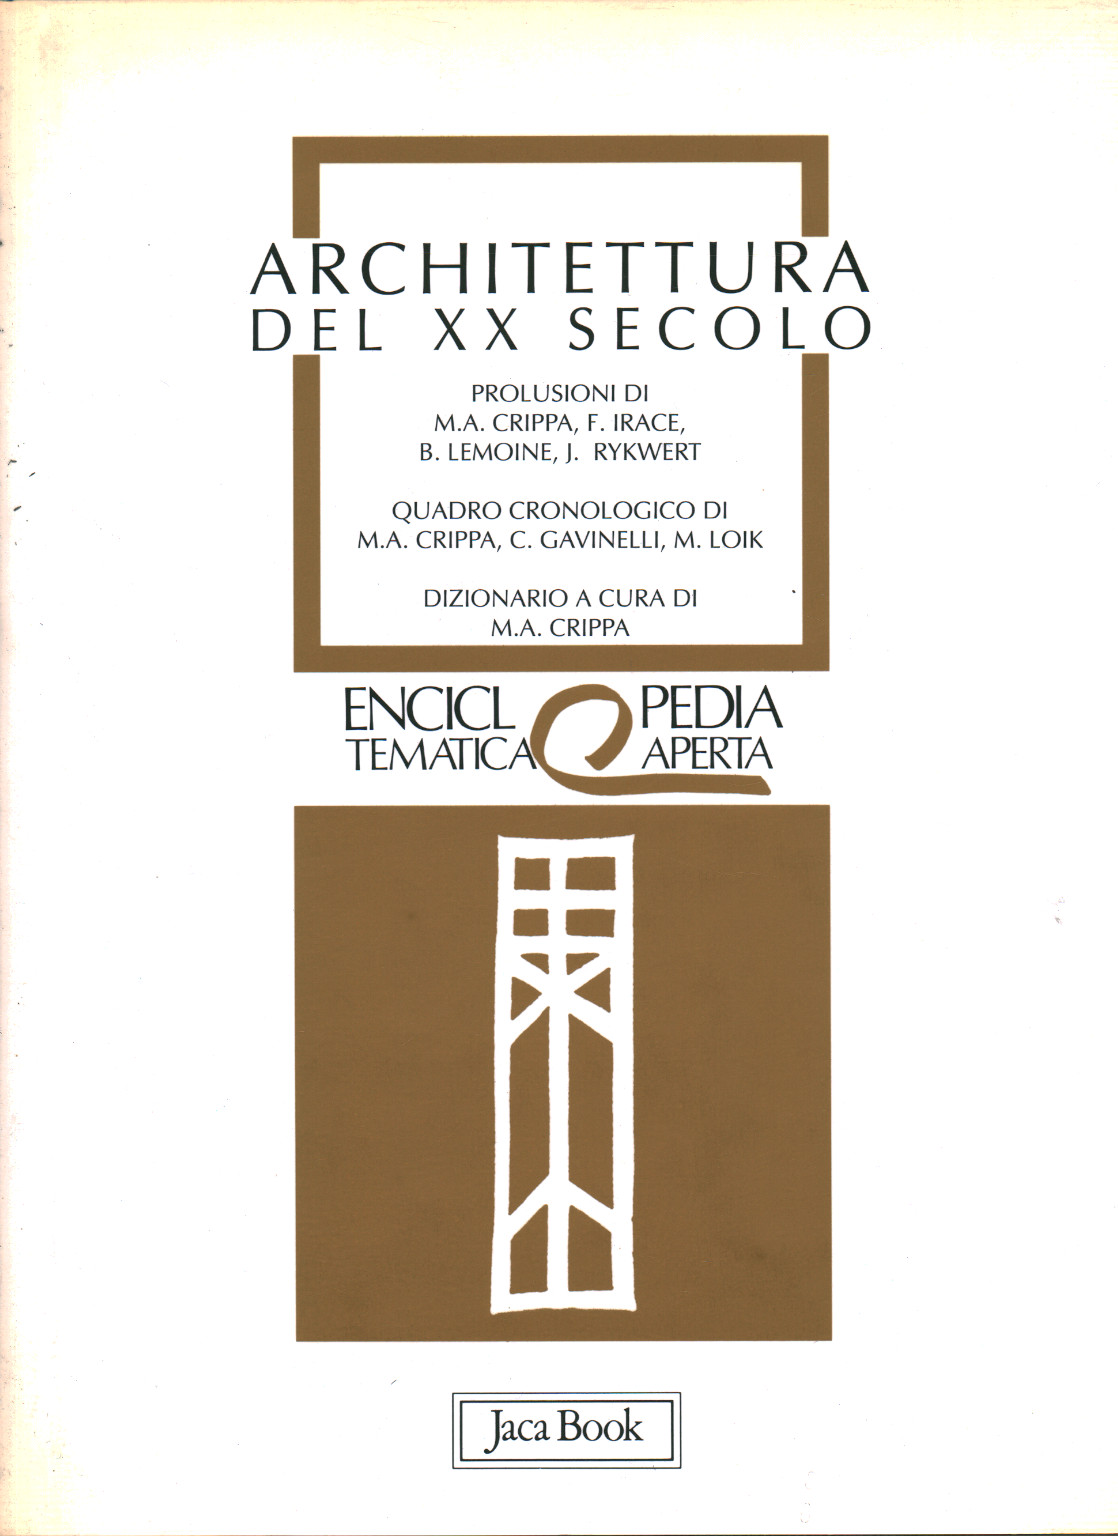 Architecture of the TWENTIETH Century, s.a.